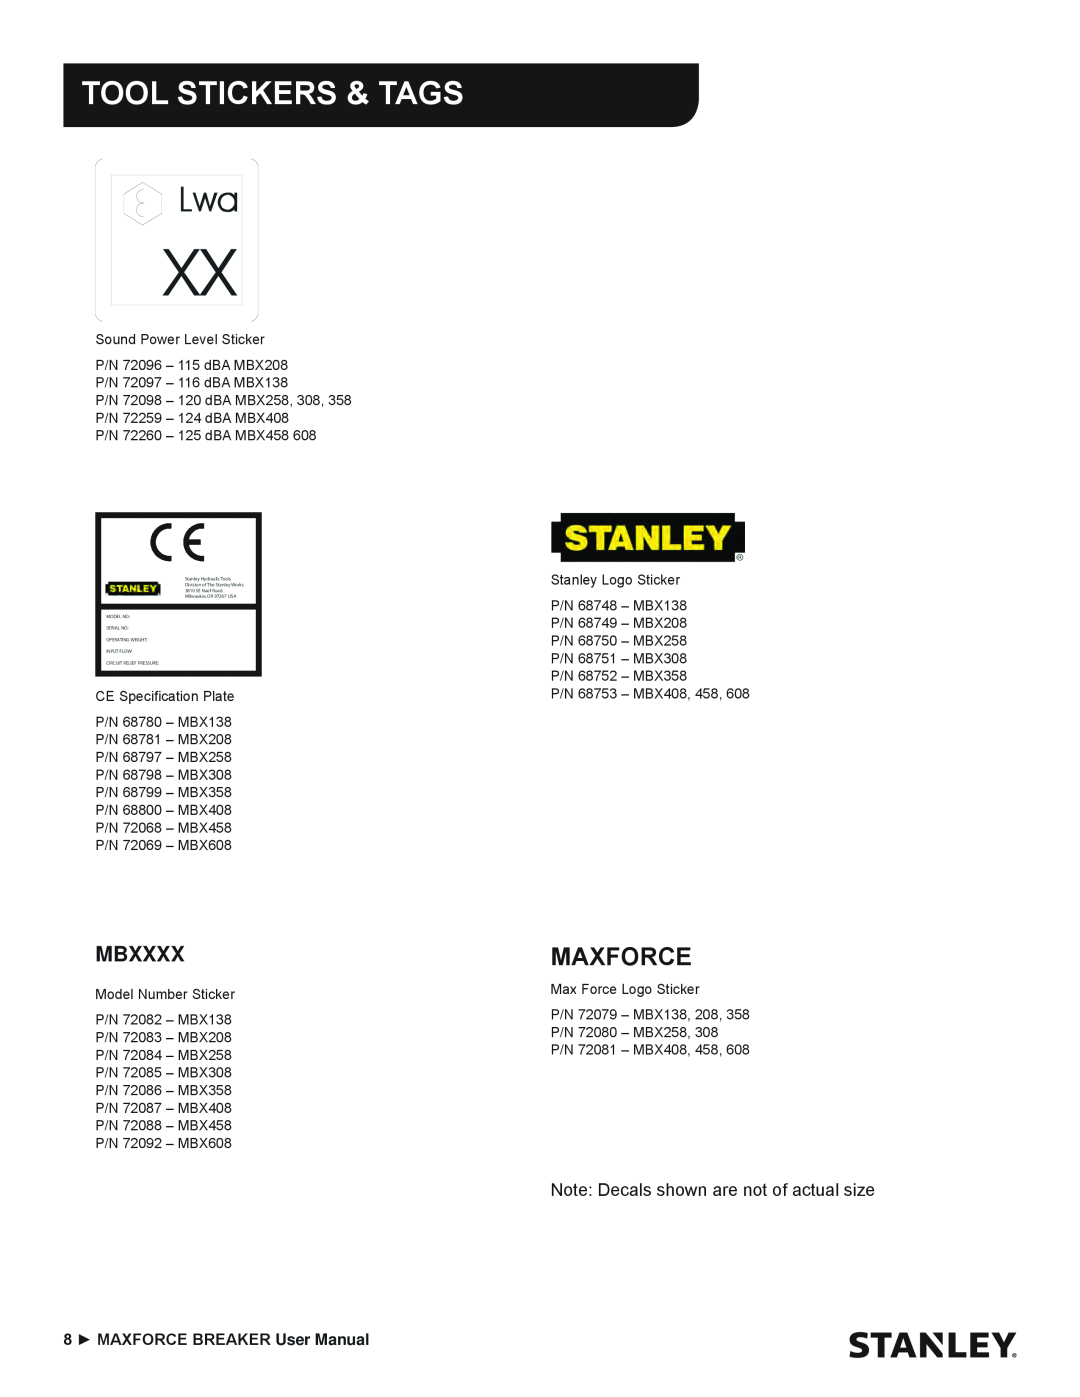 Stanley Black & Decker MBX138 thru MBX608 user manual Maxforce, Mbxxxx, Tool Stickers & Tags 